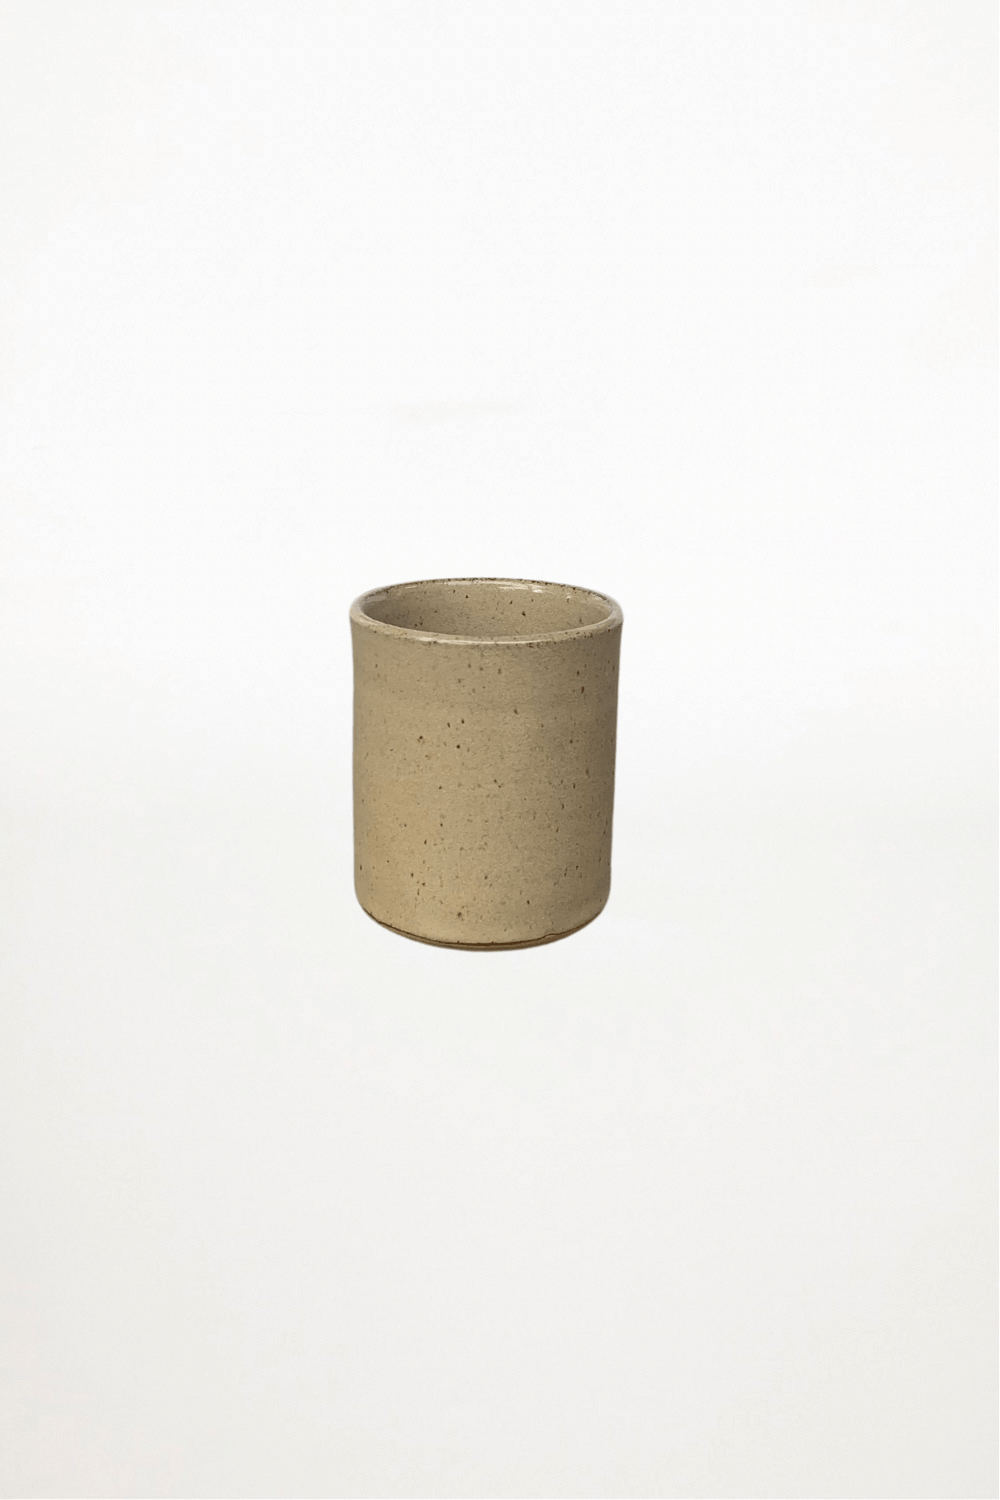 Bennetts Pottery - Cup - Tan - Ensemble Studios